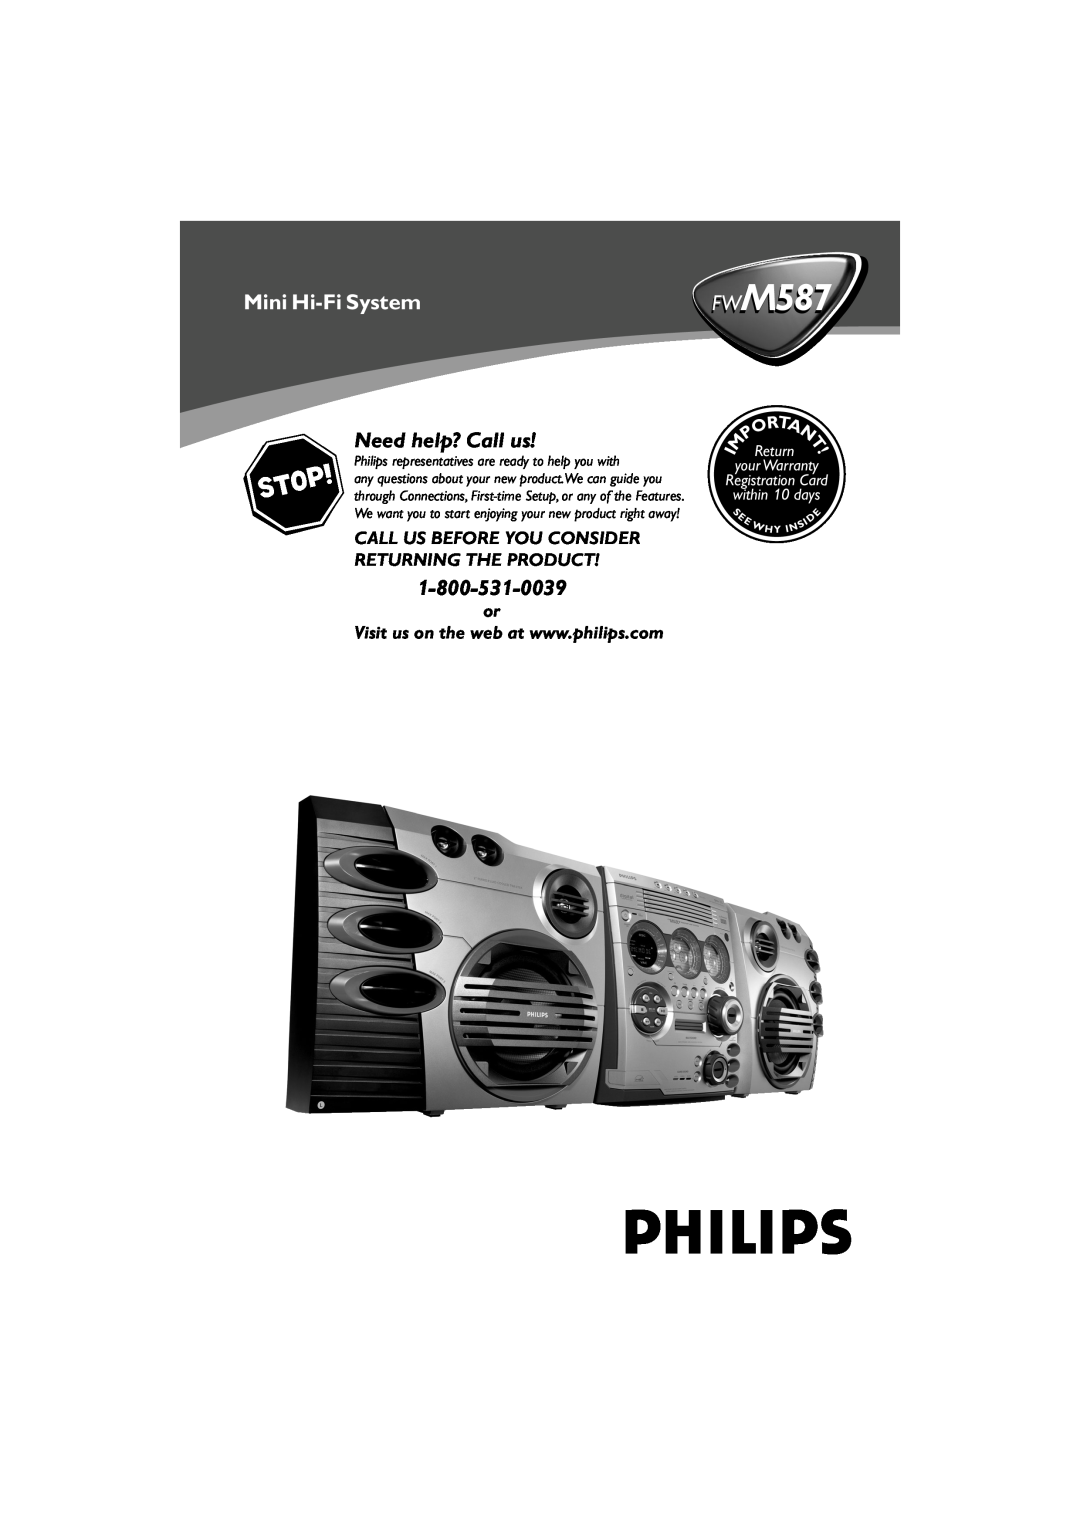 Philips FWM587/37B warranty Mini Hi-FiSystem, Need help? Call us, your Warranty Registration Card within 10 days, Return 